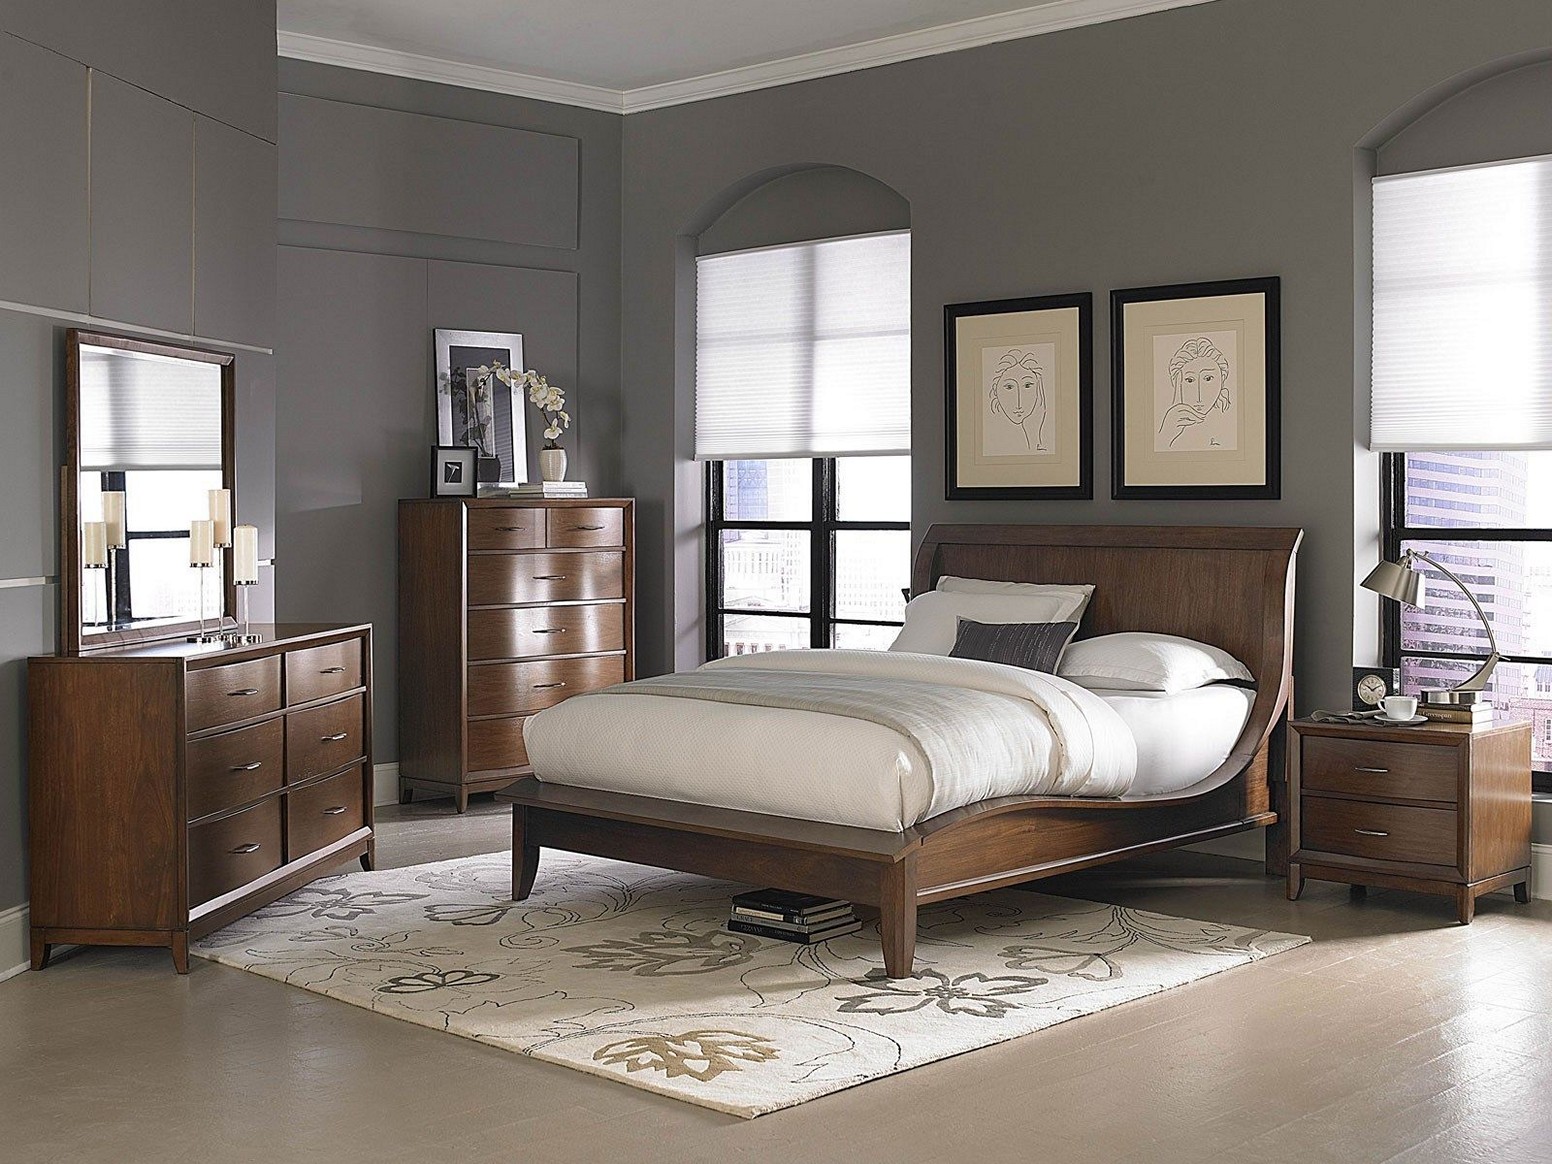 master bedroom furniture ideas photo - 10